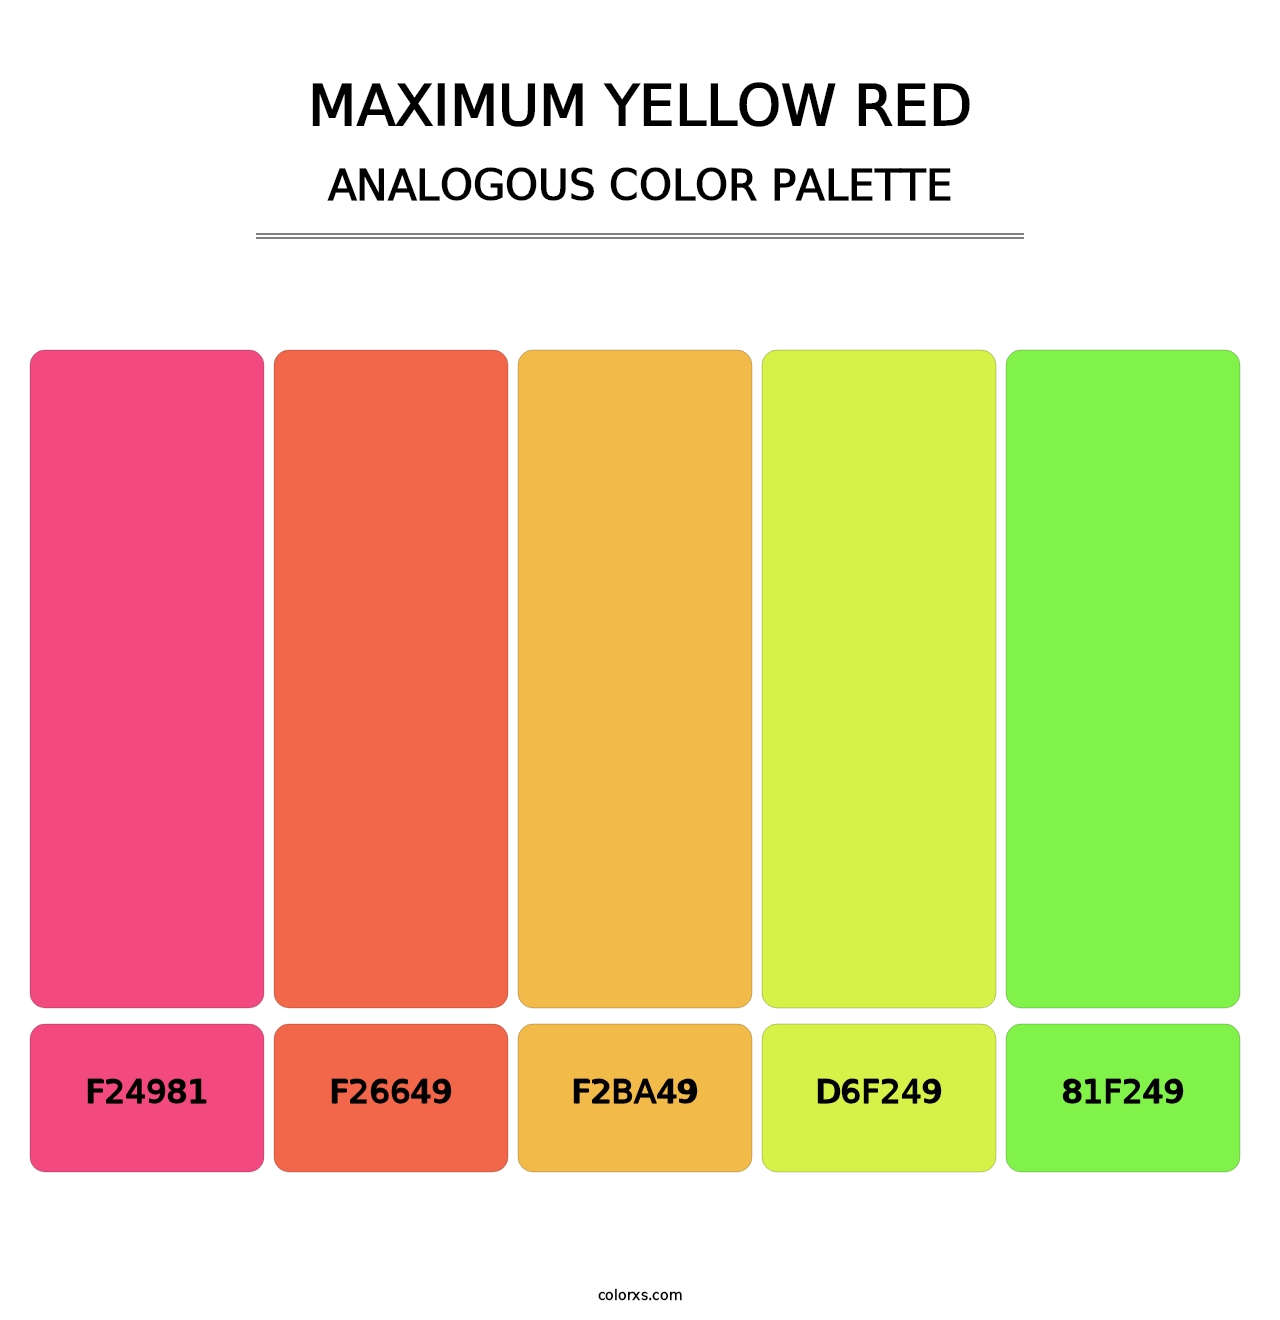 Maximum Yellow Red - Analogous Color Palette